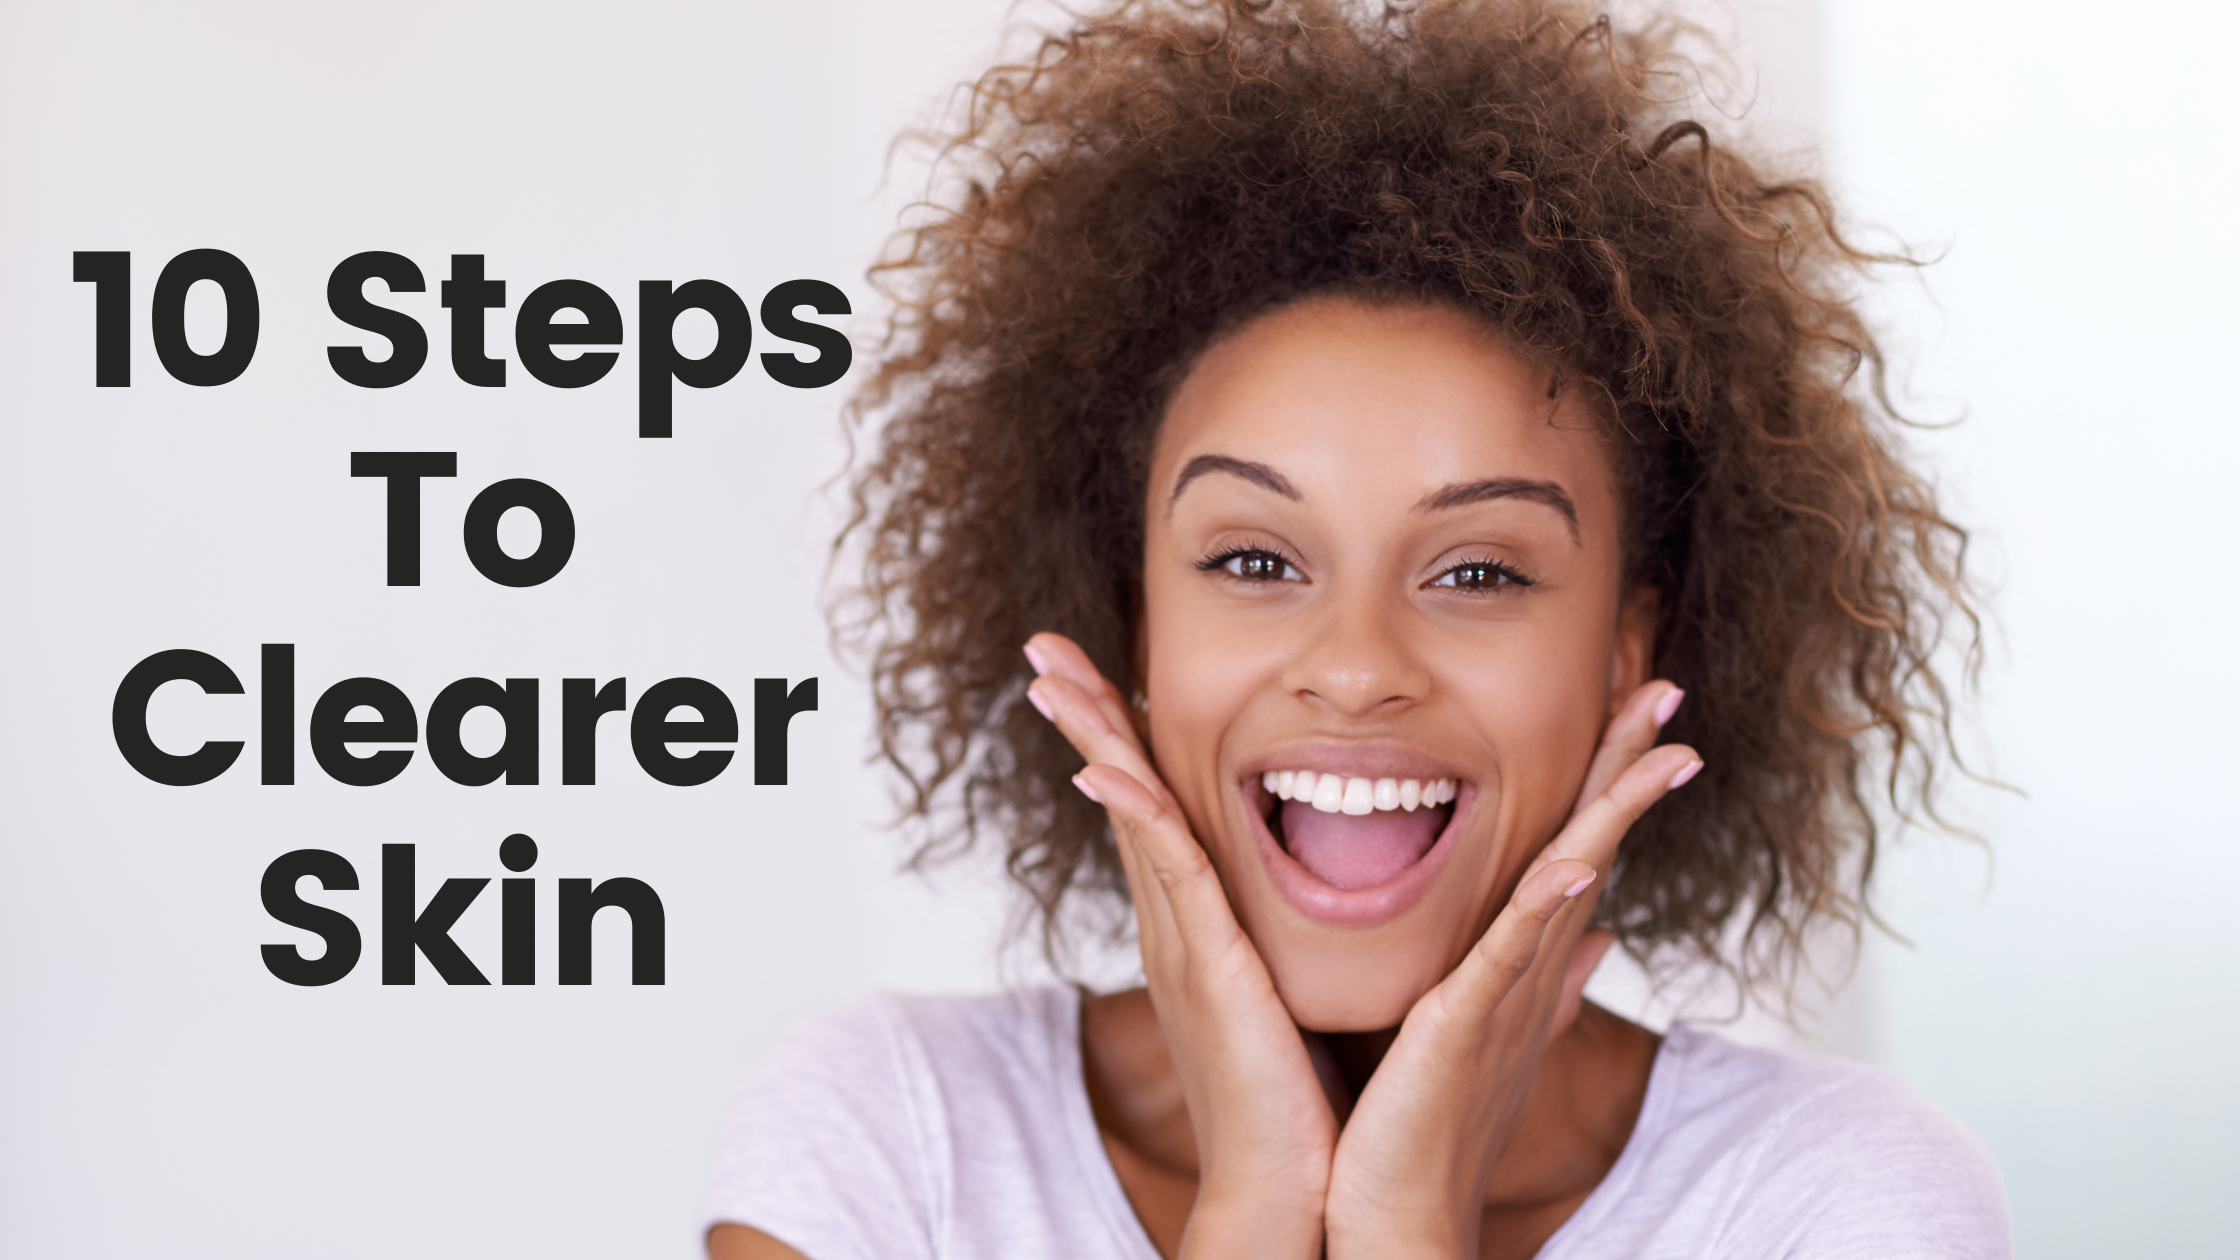 10 Steps To Clearer Skin